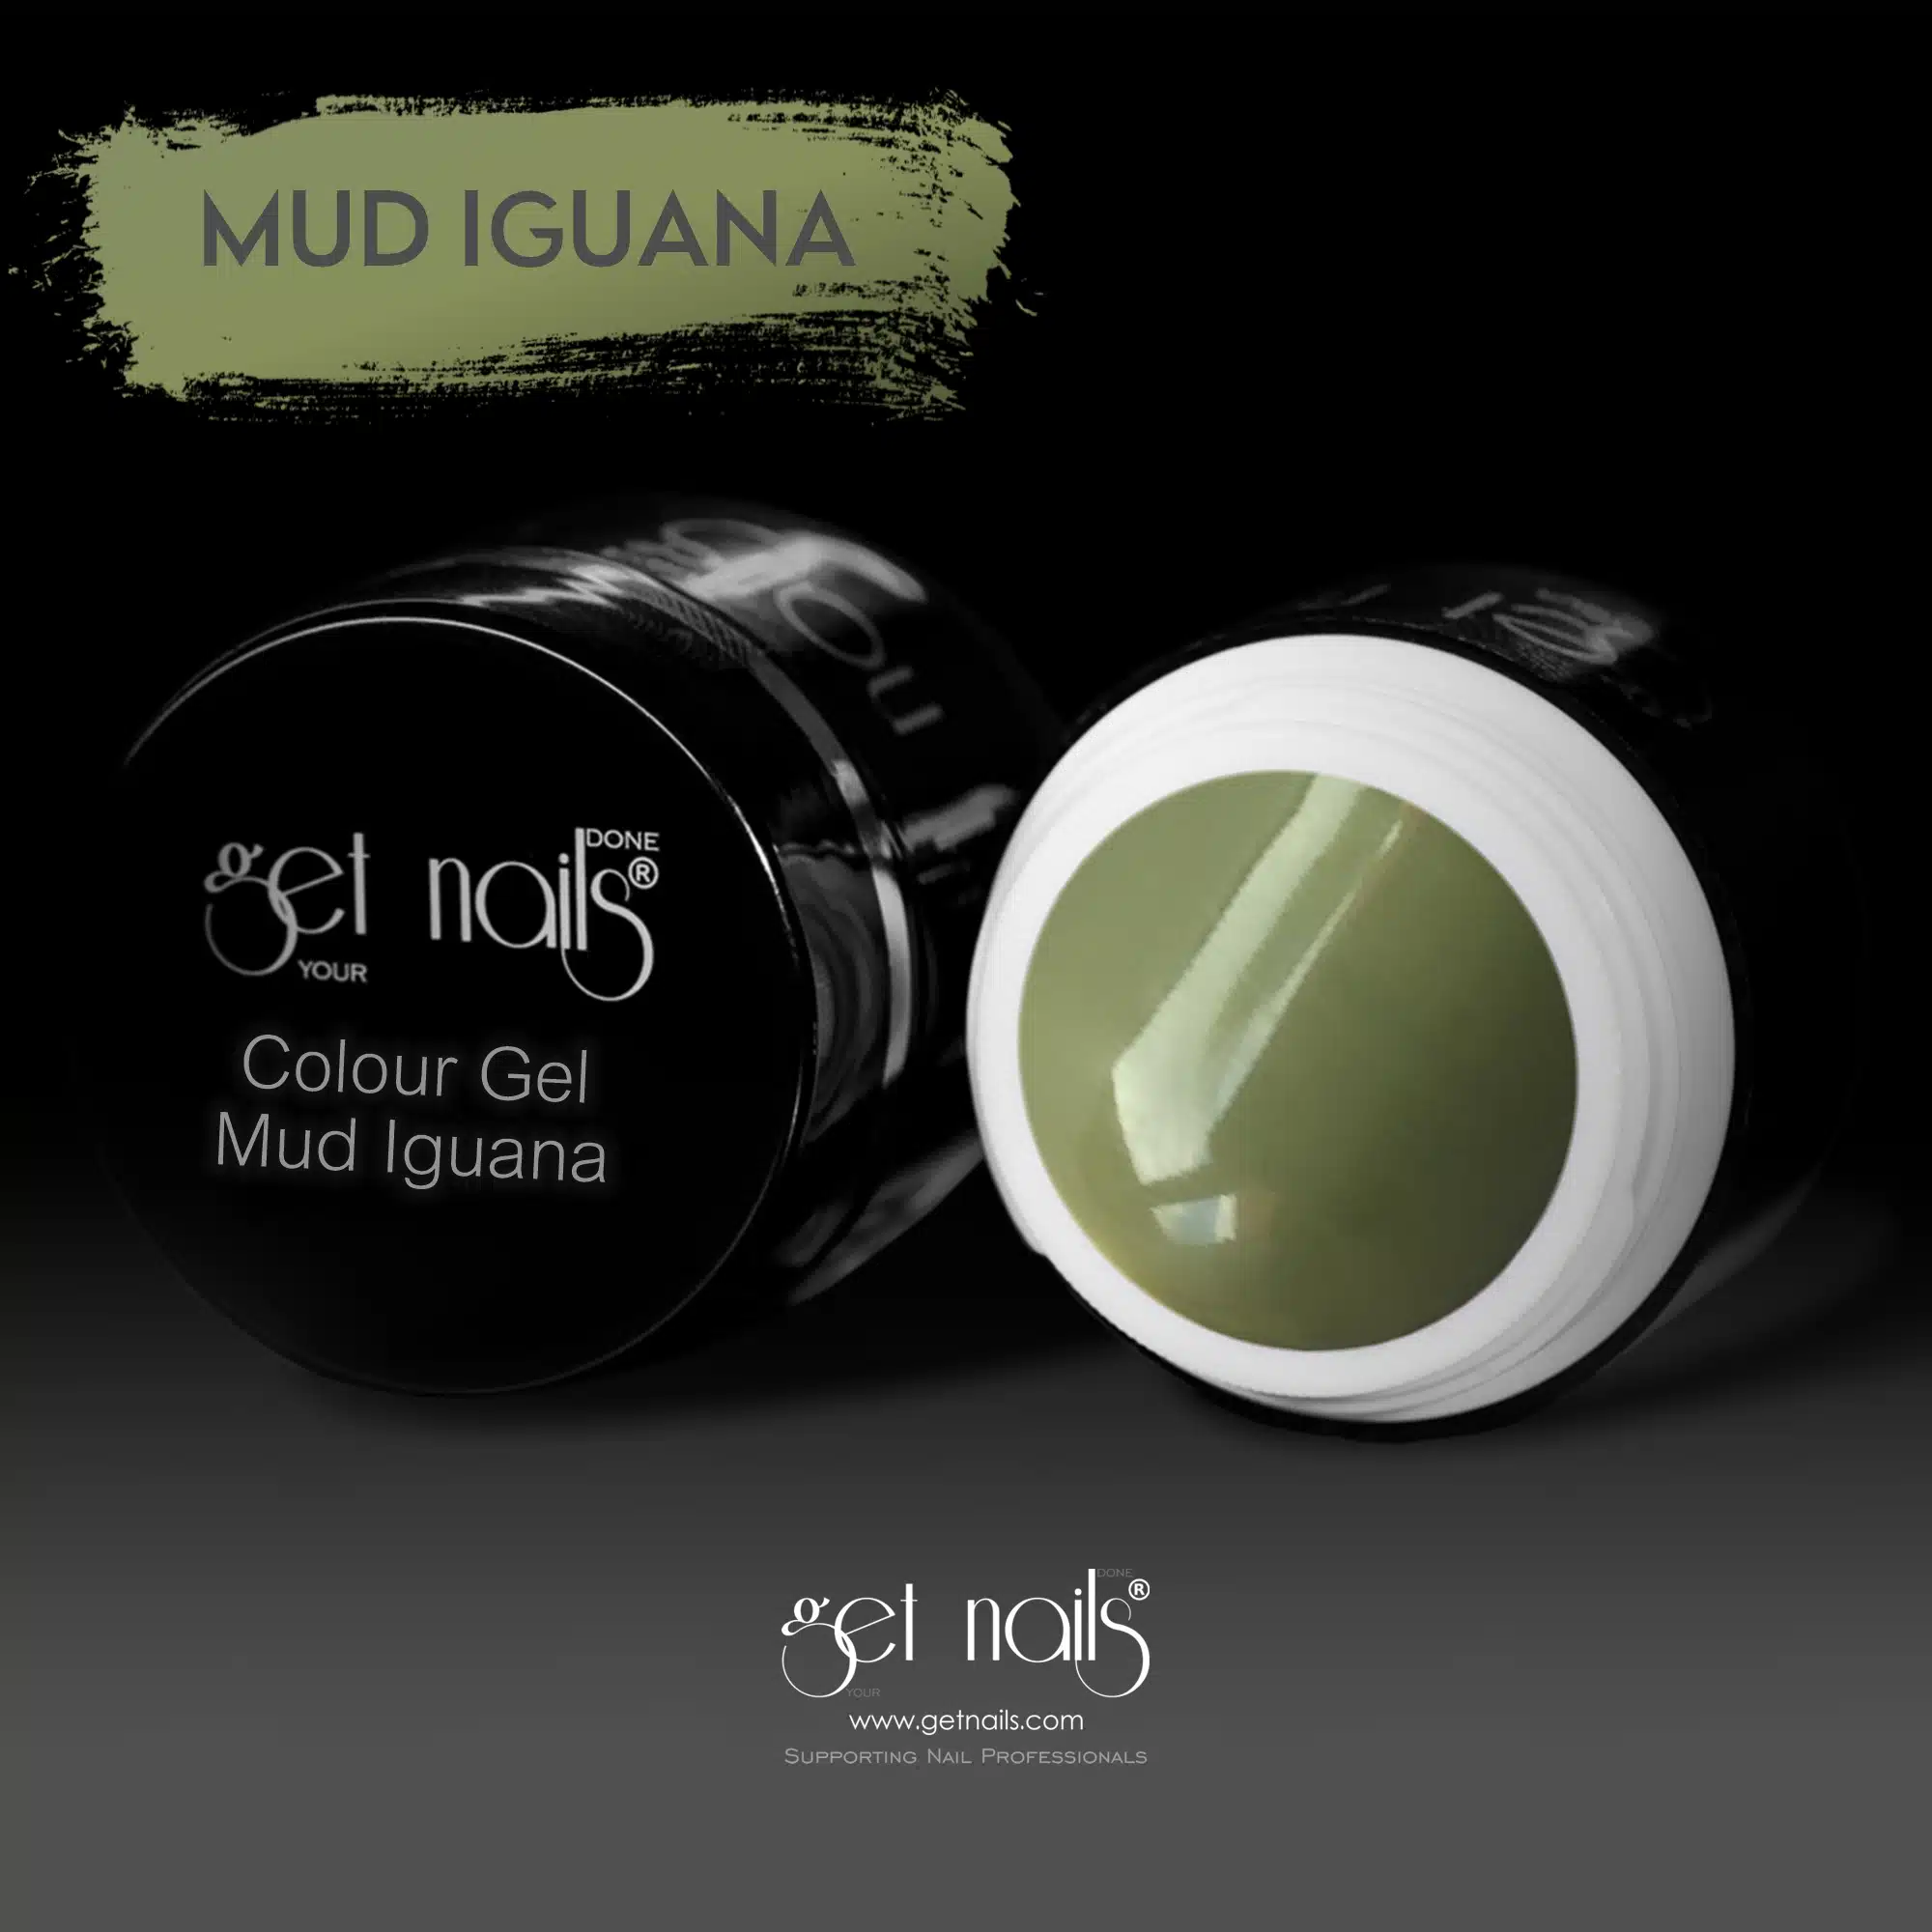 Get Nails Austria - Colour Gel Mud Iguana 5g